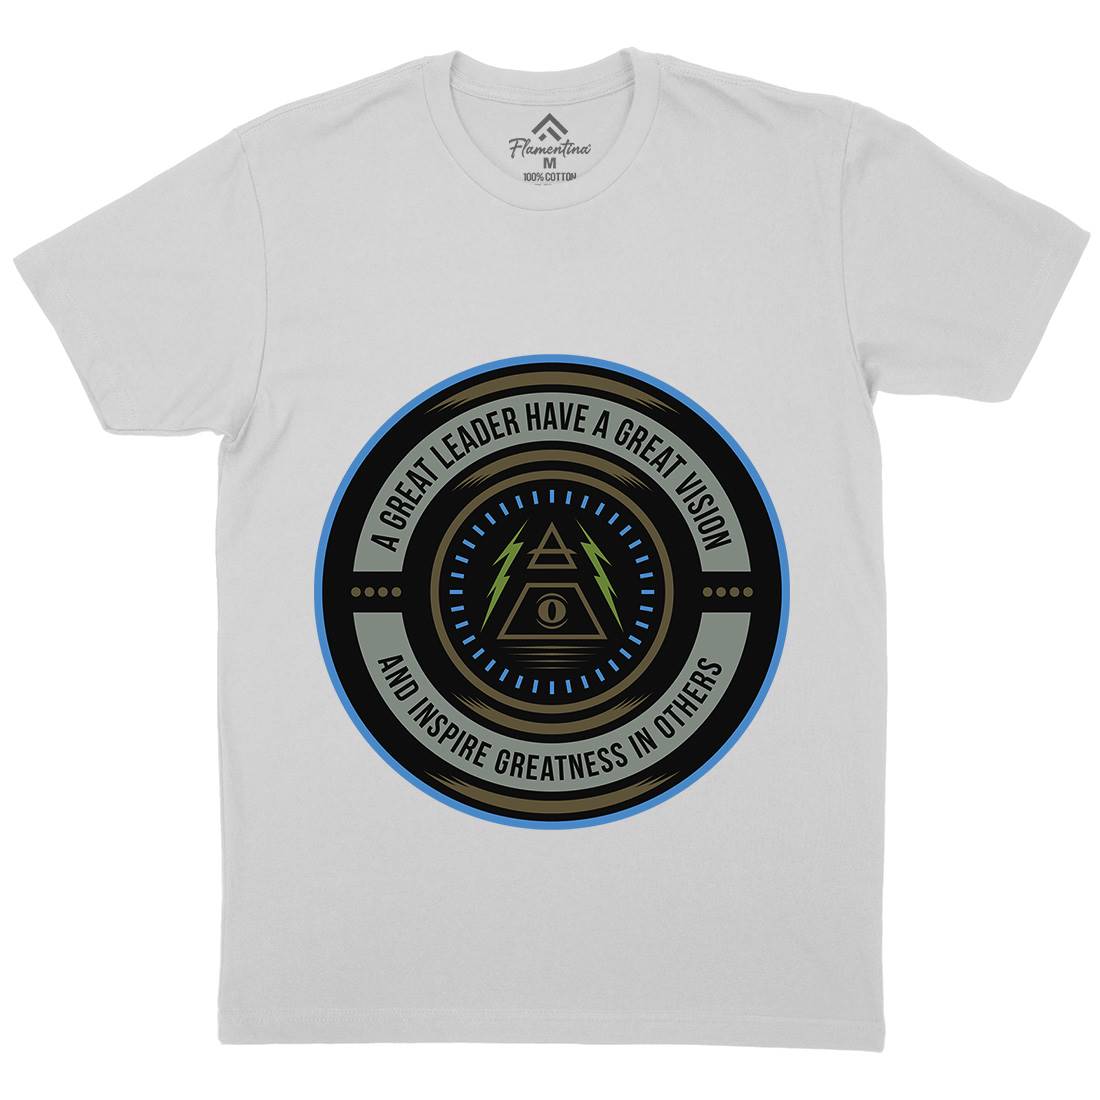 Great Vision Mens Crew Neck T-Shirt Illuminati A323